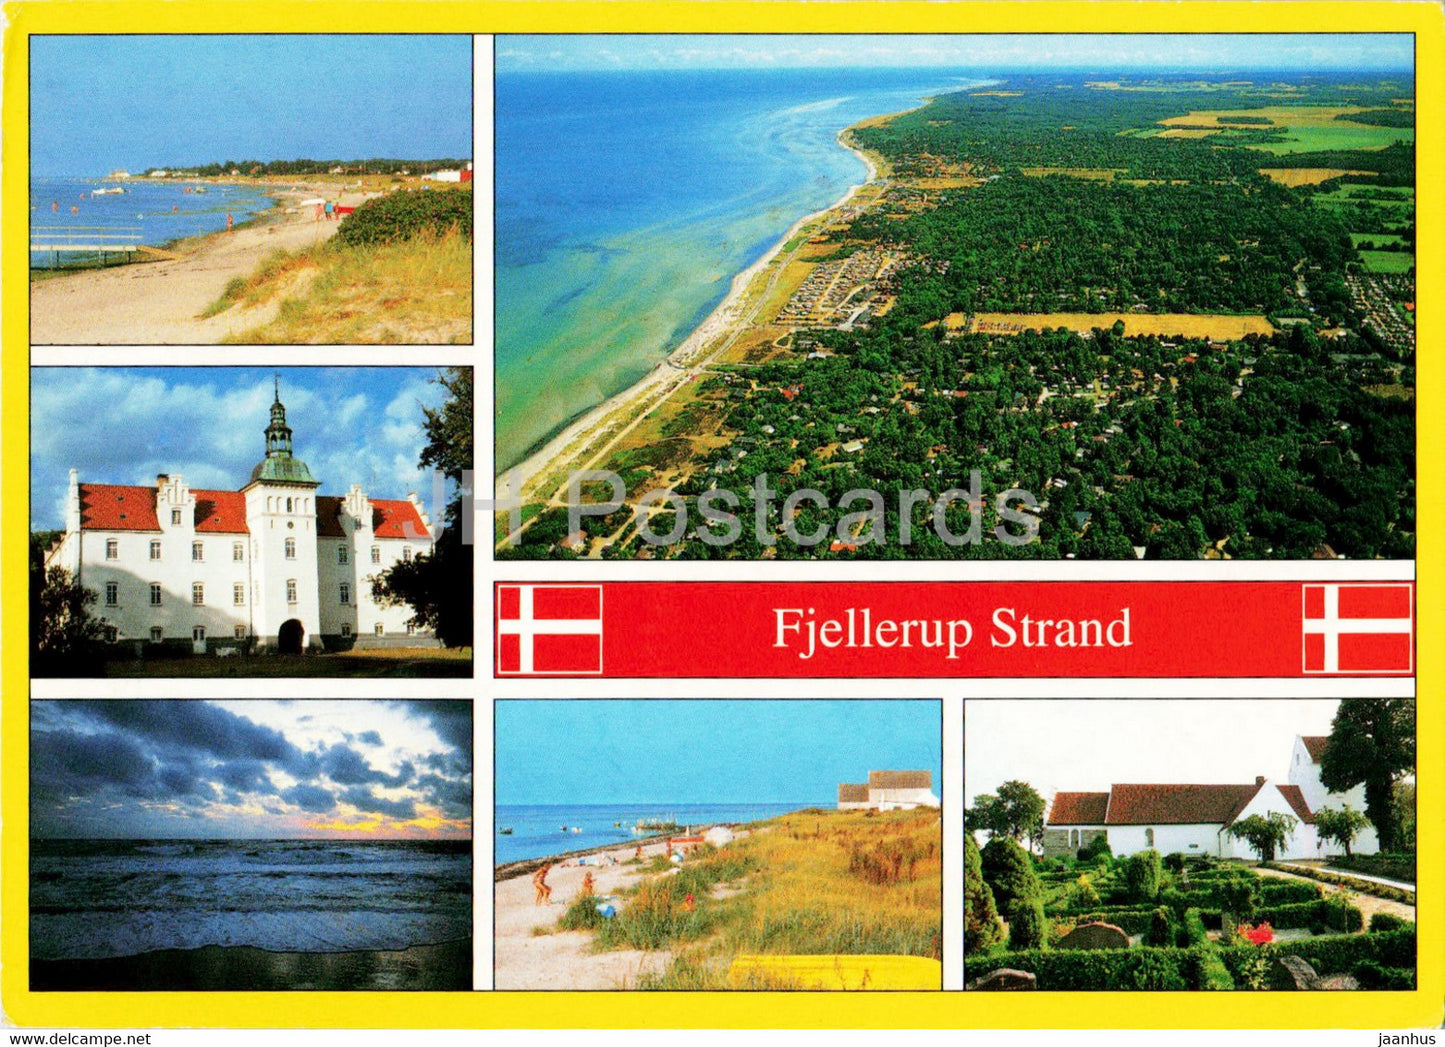 Fjellerup Strand - multiview - 1997 - Denmark - used - JH Postcards